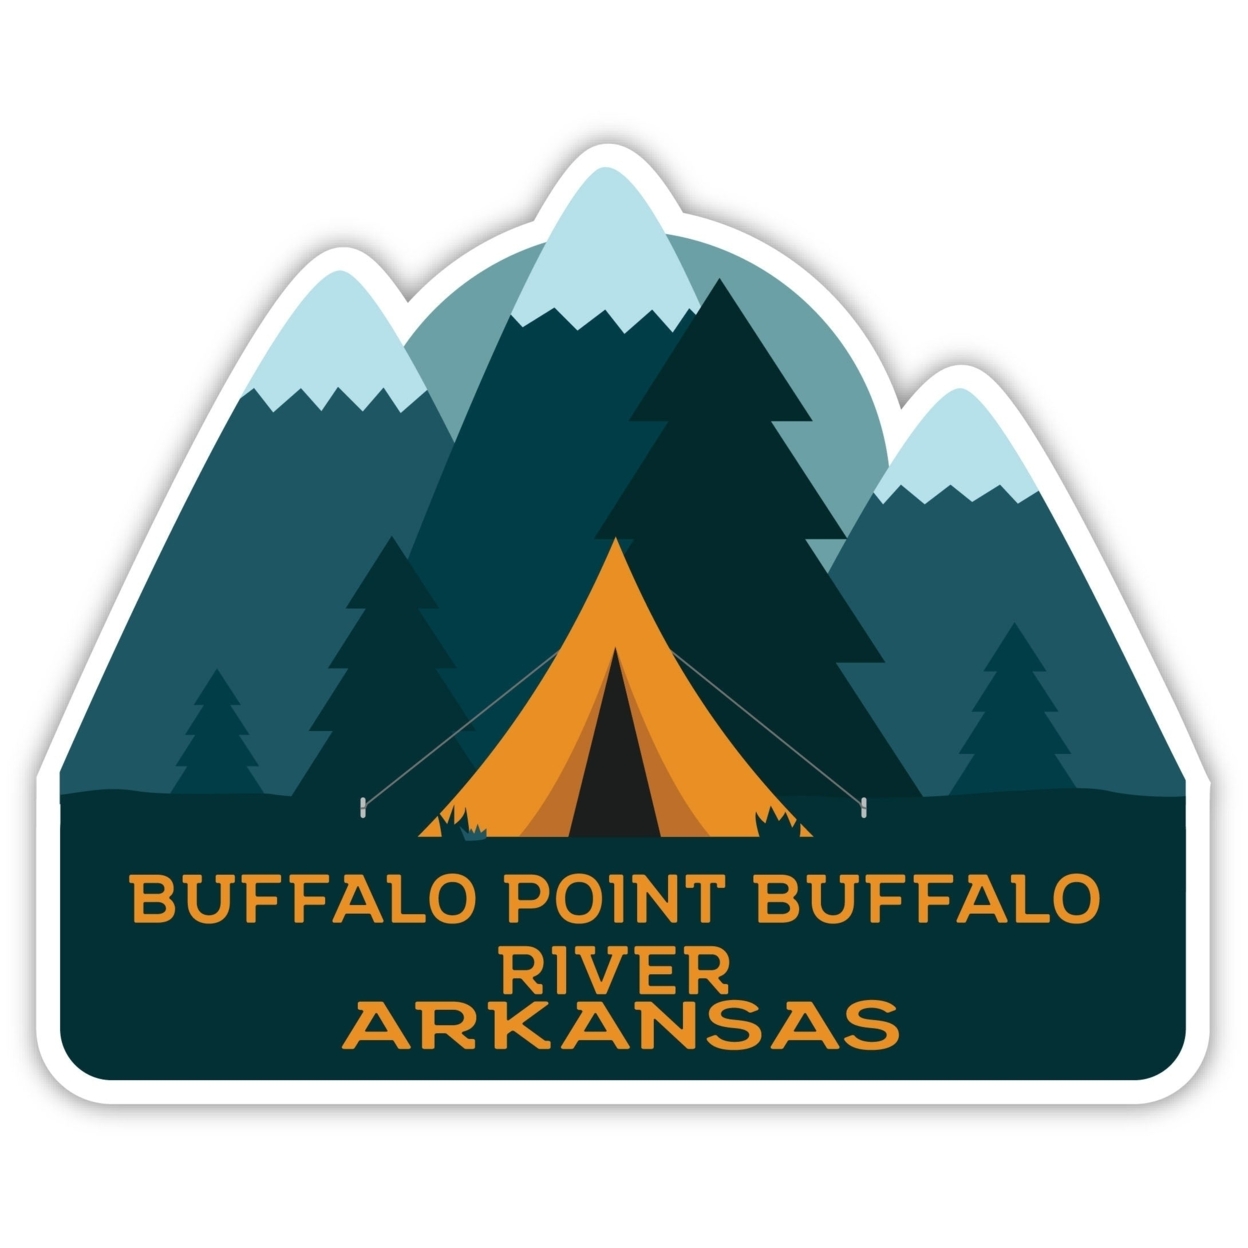 Buffalo Point Buffalo River Arkansas Souvenir Decorative Stickers (Choose Theme And Size) - Single Unit, 4-Inch, Camp Life